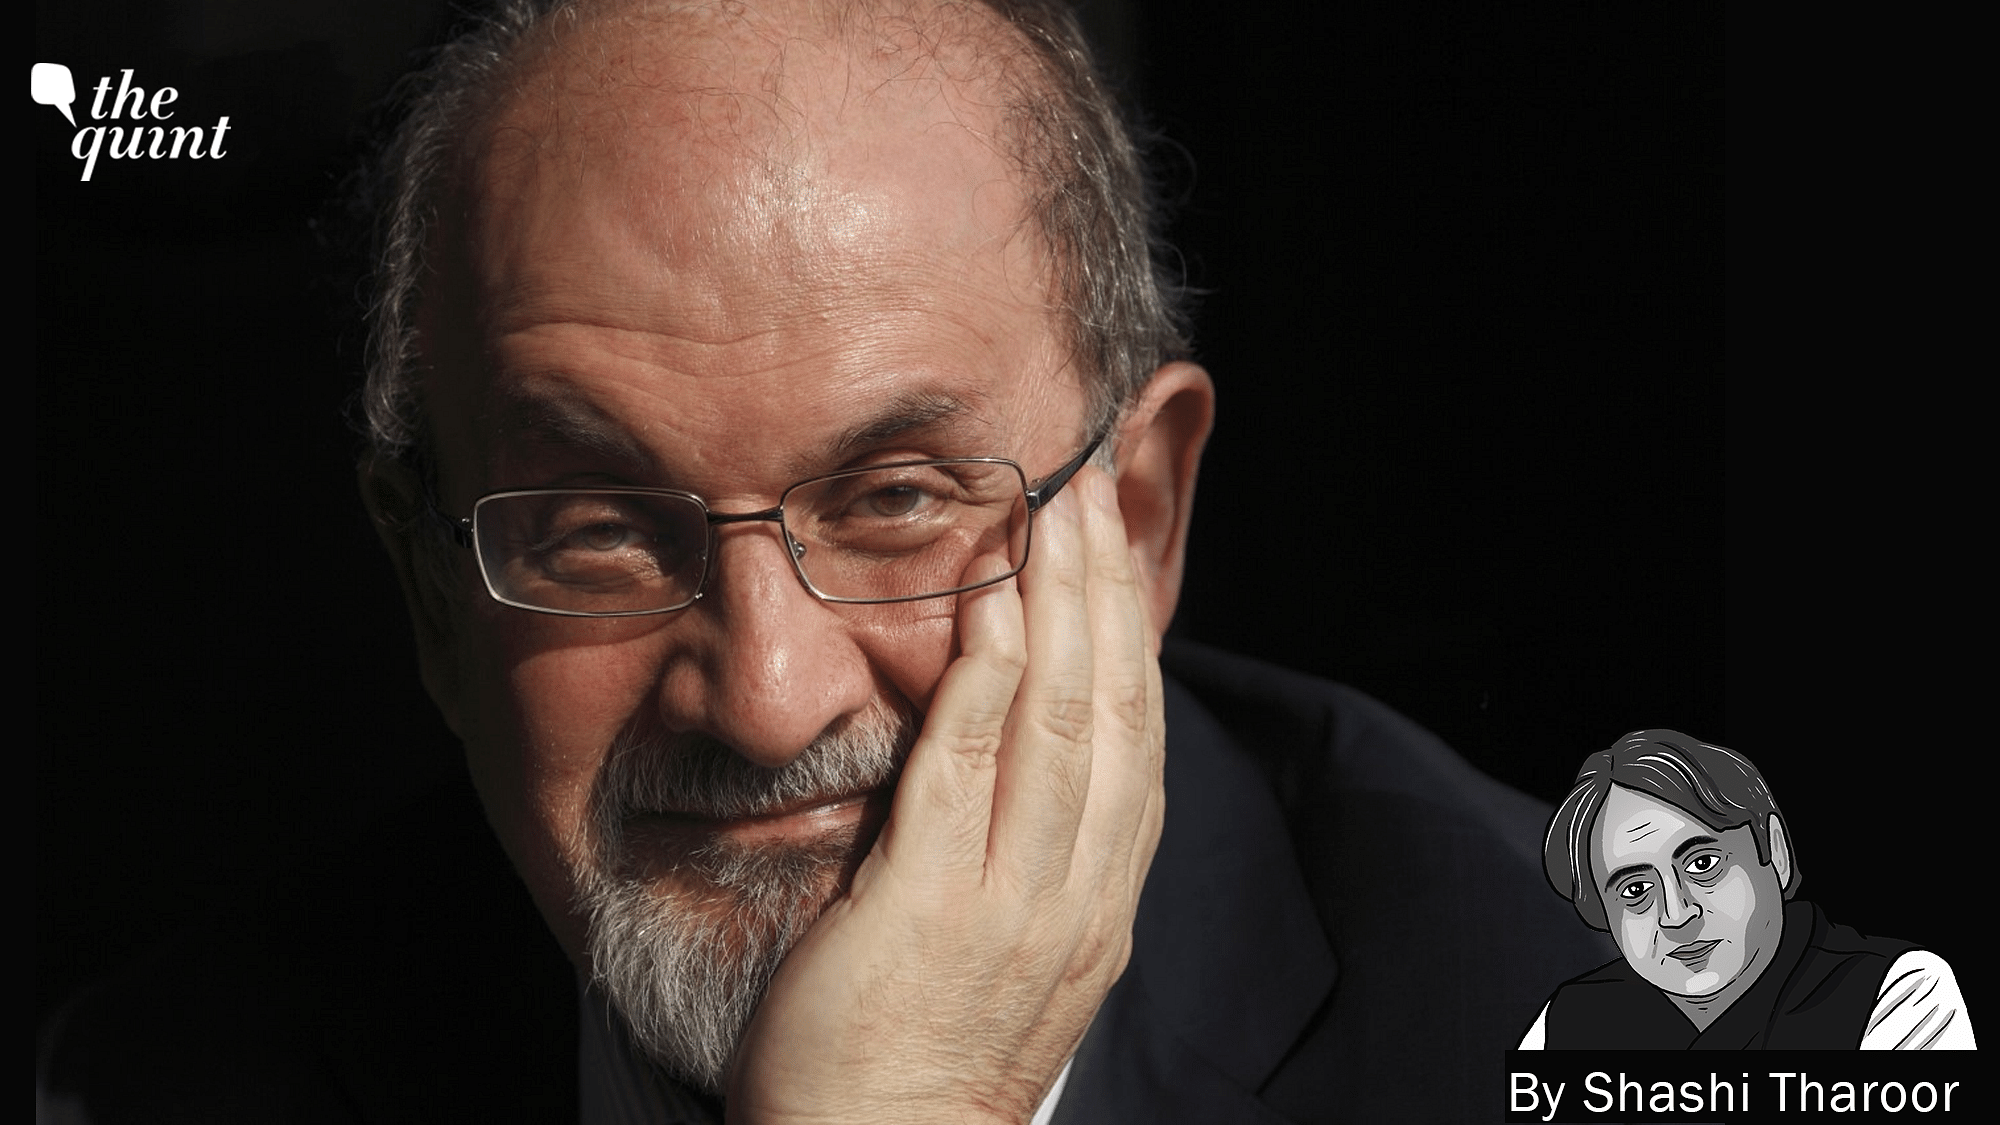 <div class="paragraphs"><p>Salman Rushdie</p></div>